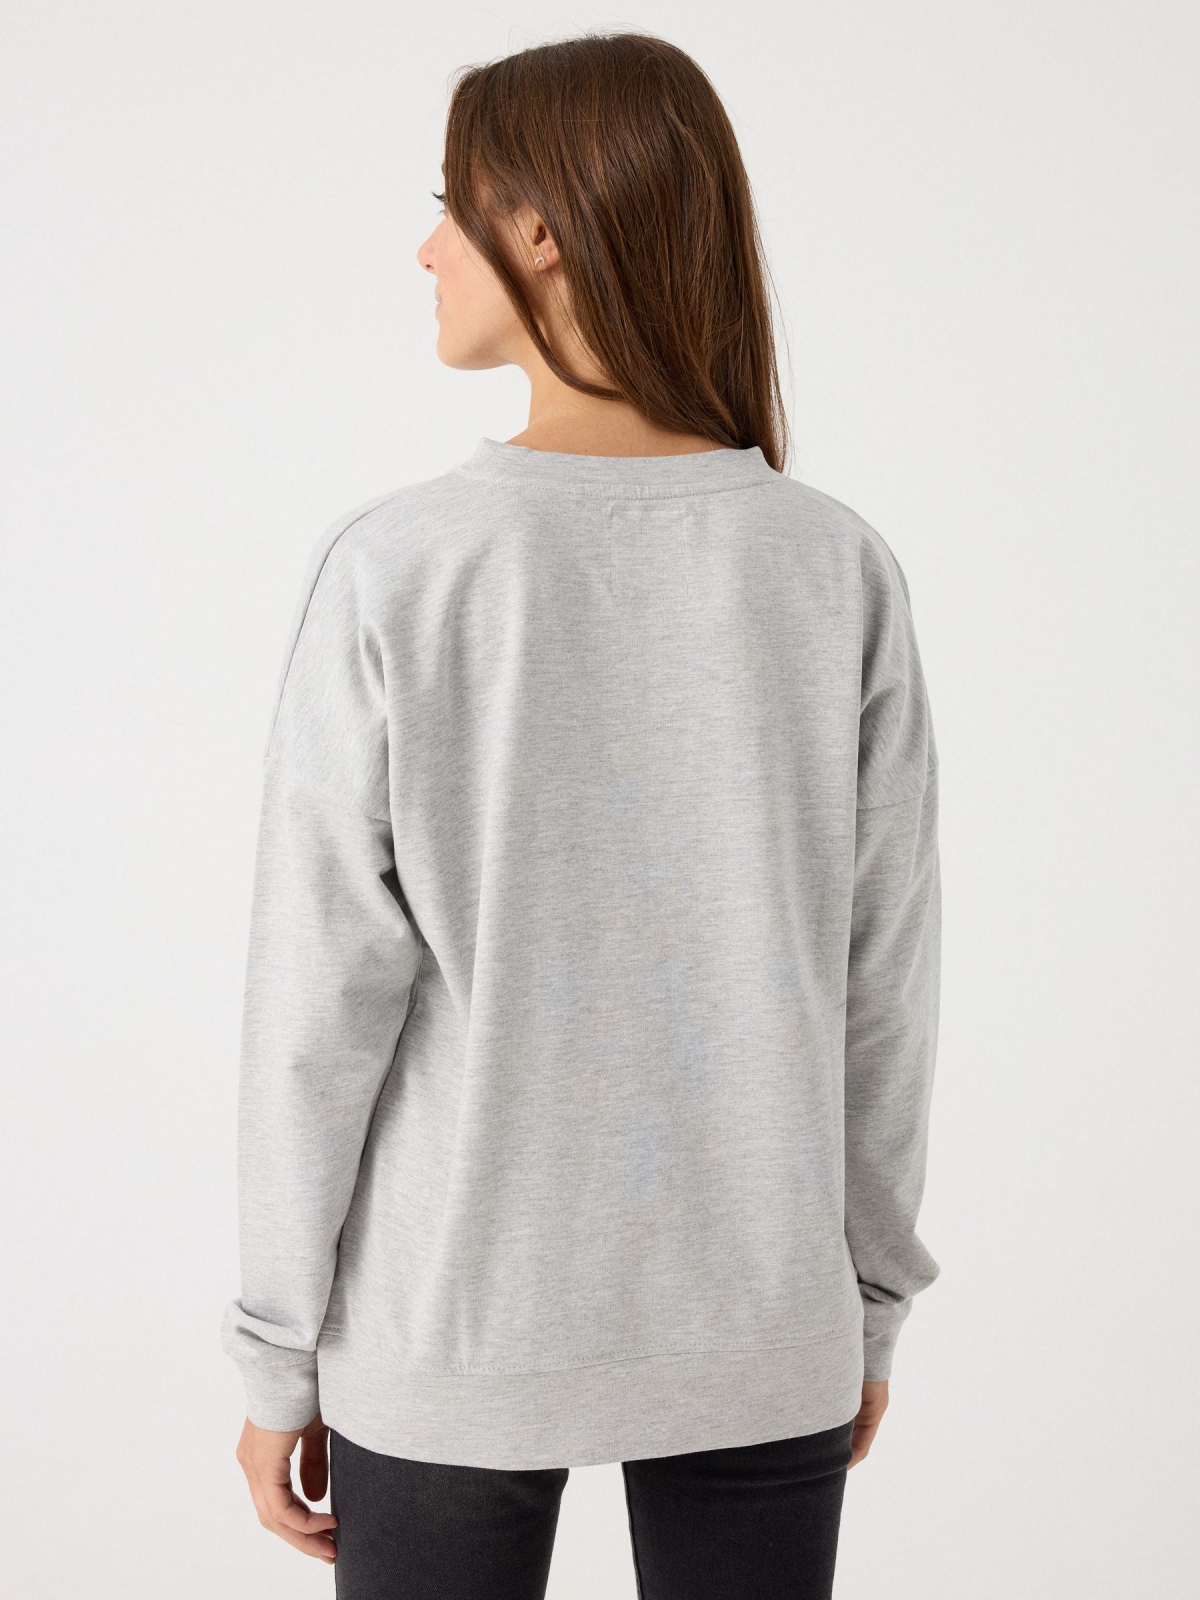 Sweatshirt básica gola redonda cinza vista meia traseira